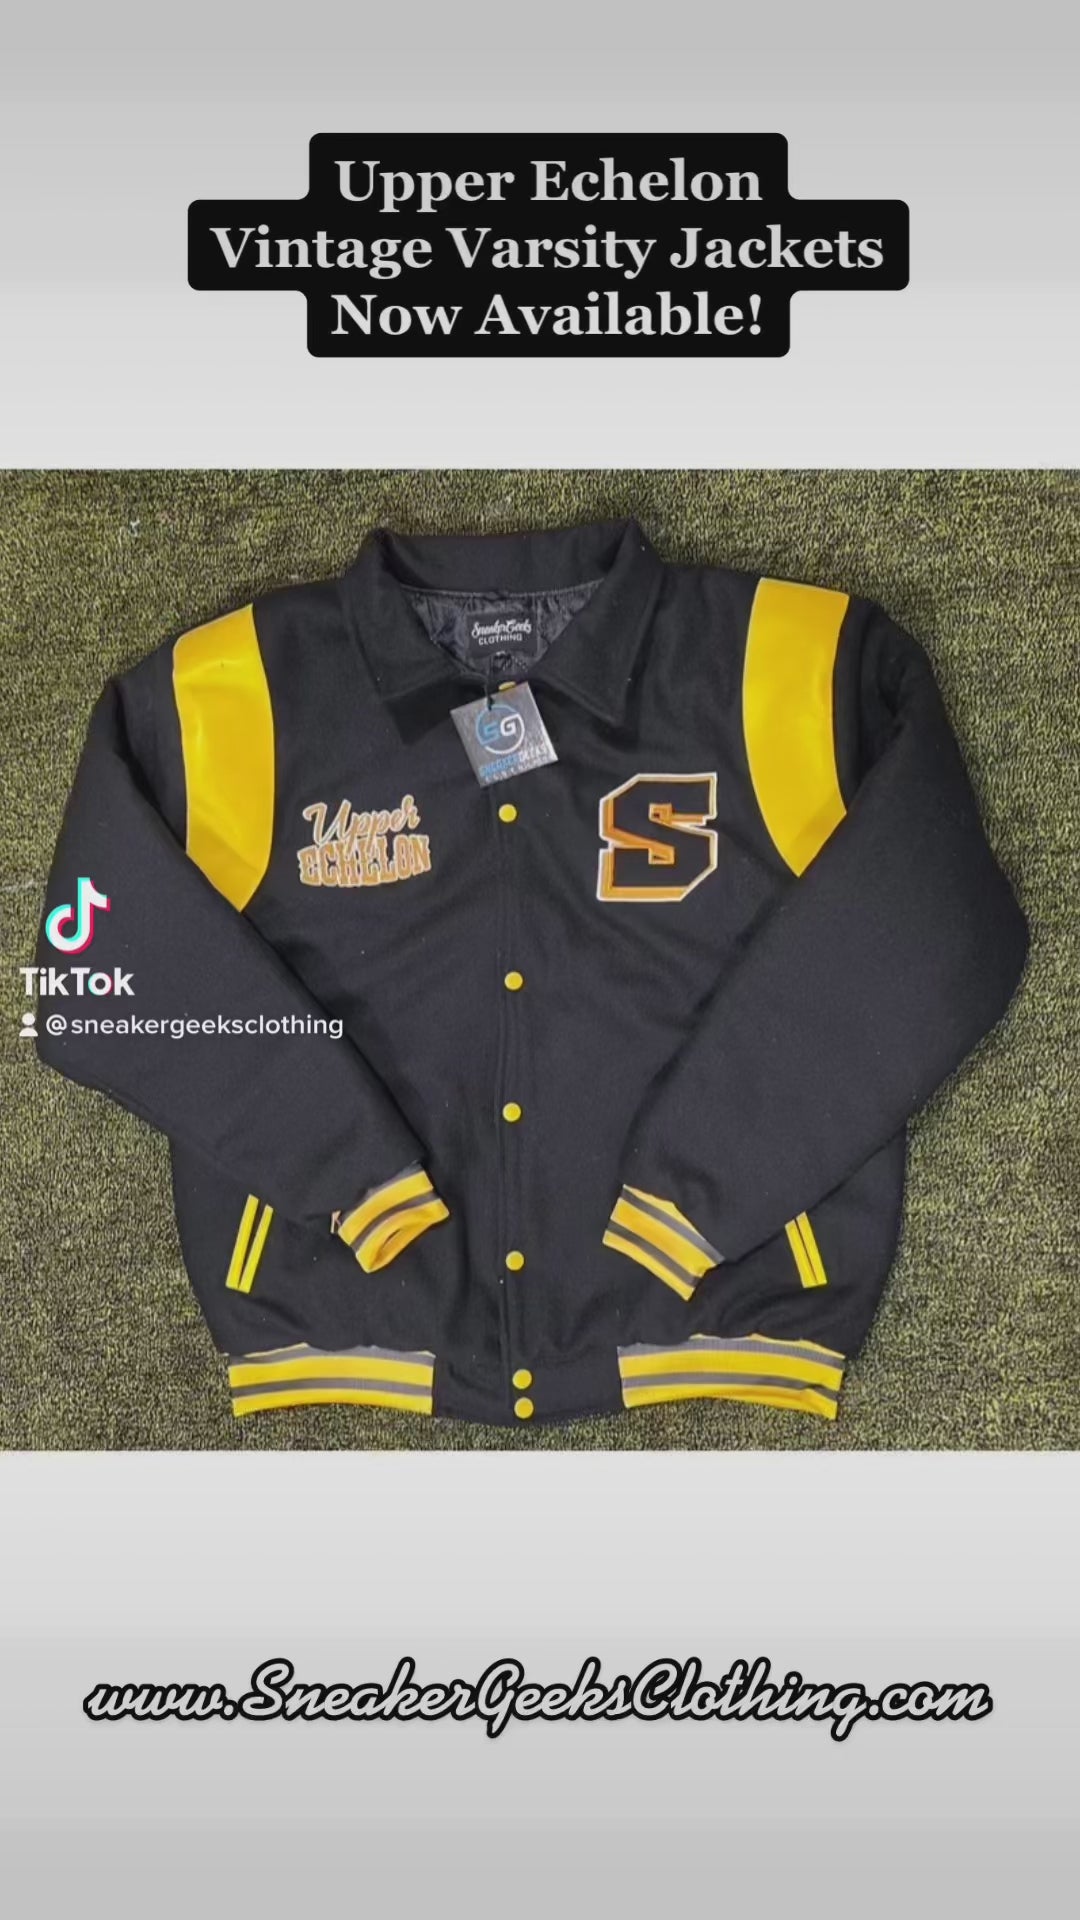 Upper Echelon Vintage Varsity Jacket to match Retro Jordan 1 OG Bred